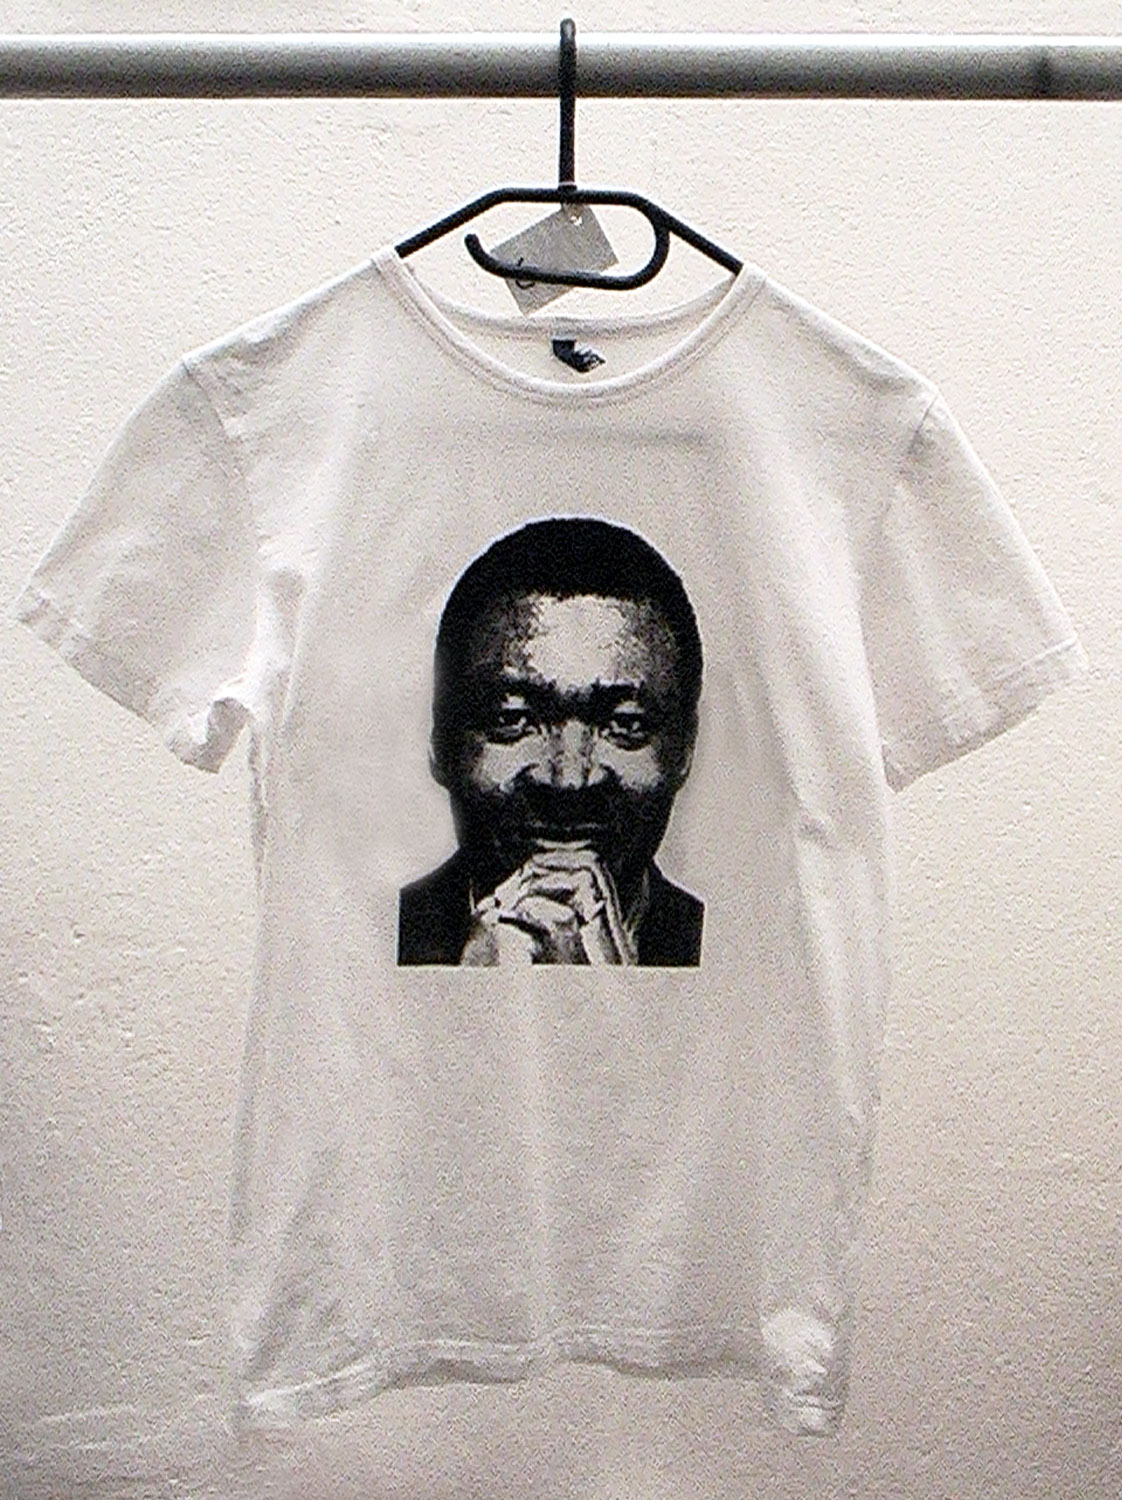 the Okwui Shirt 1 & 2 (2002/2011) CONCEPTUAL T-SHIRT